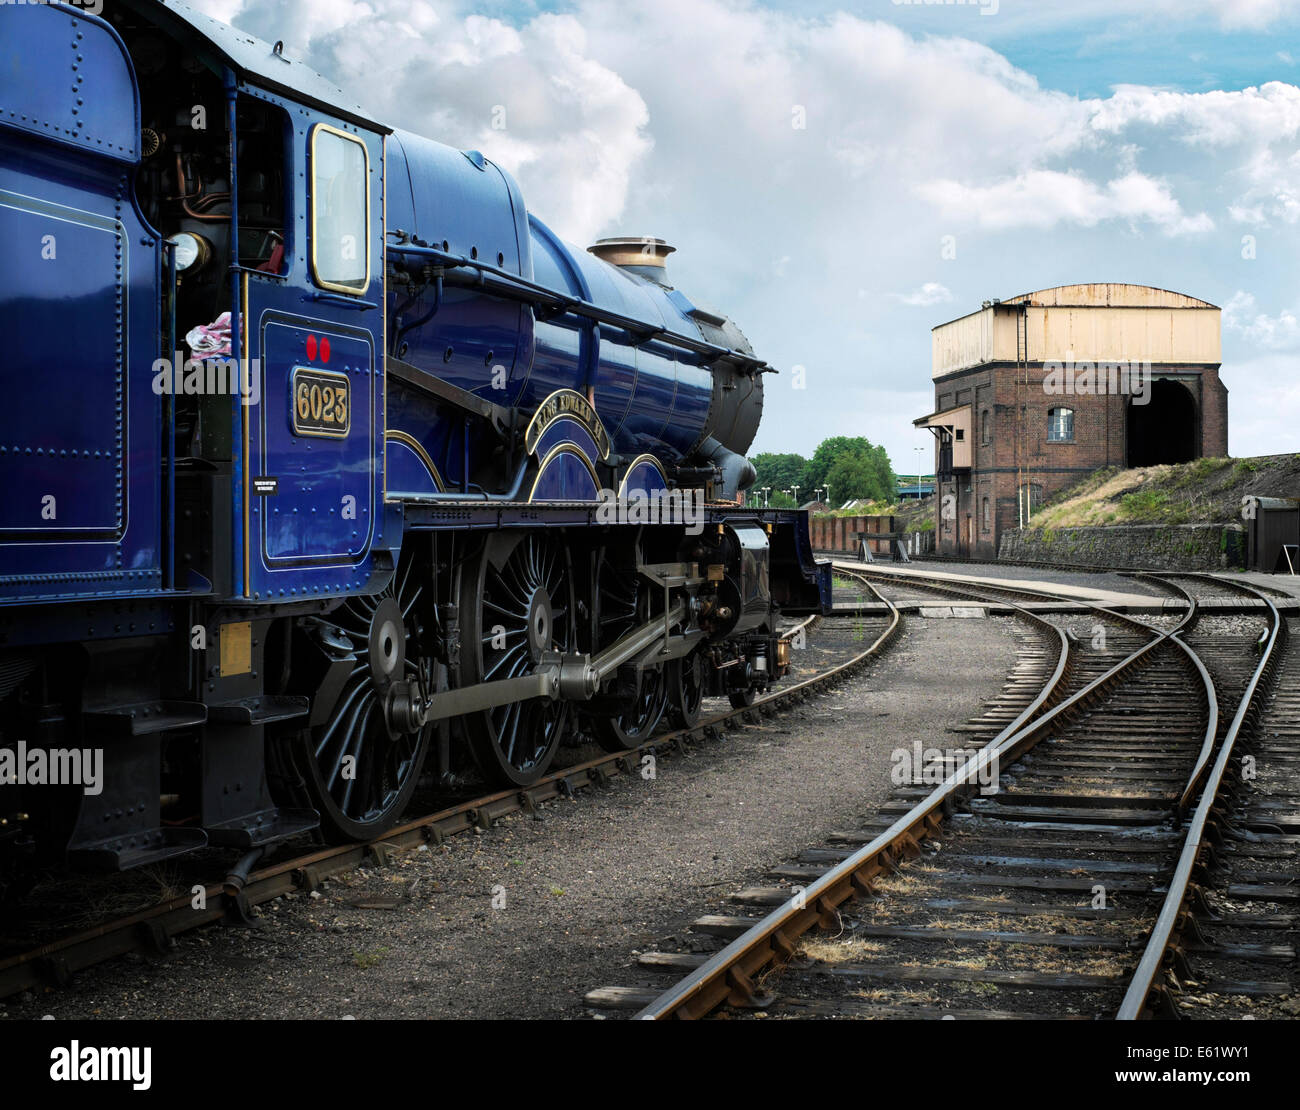 Splendidamente restaurata re Class ex Great Western locomotore ferroviario " King Edward II" n. 6023 parcheggiato a Didcot railway centre Foto Stock